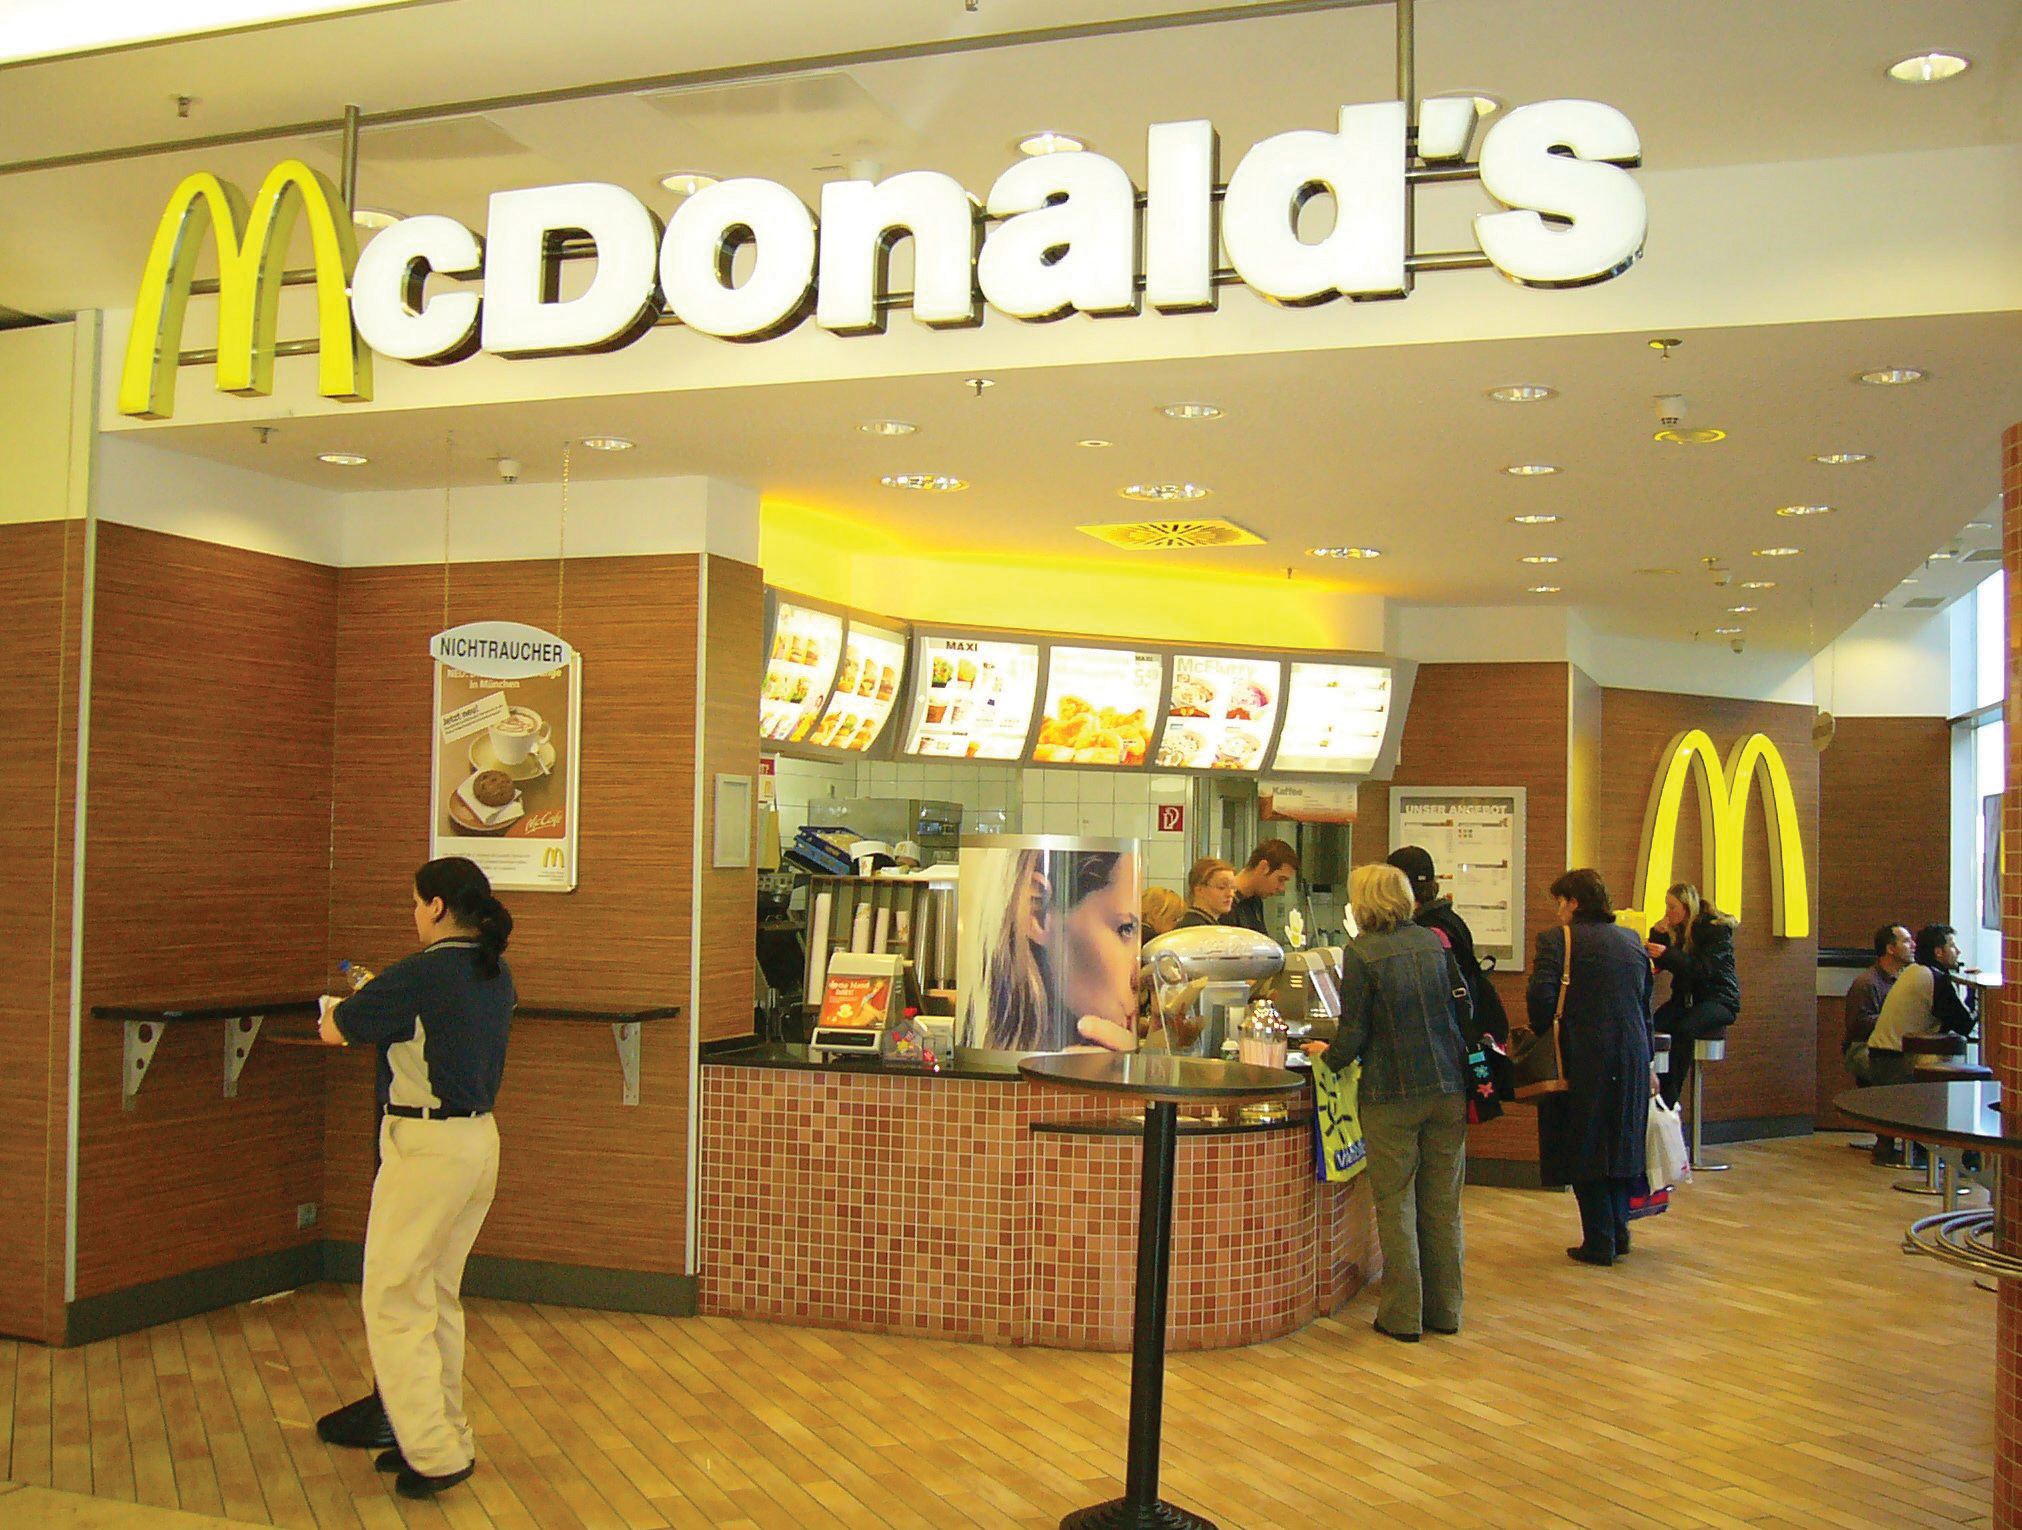 Storefront of a McDonald's restaurant